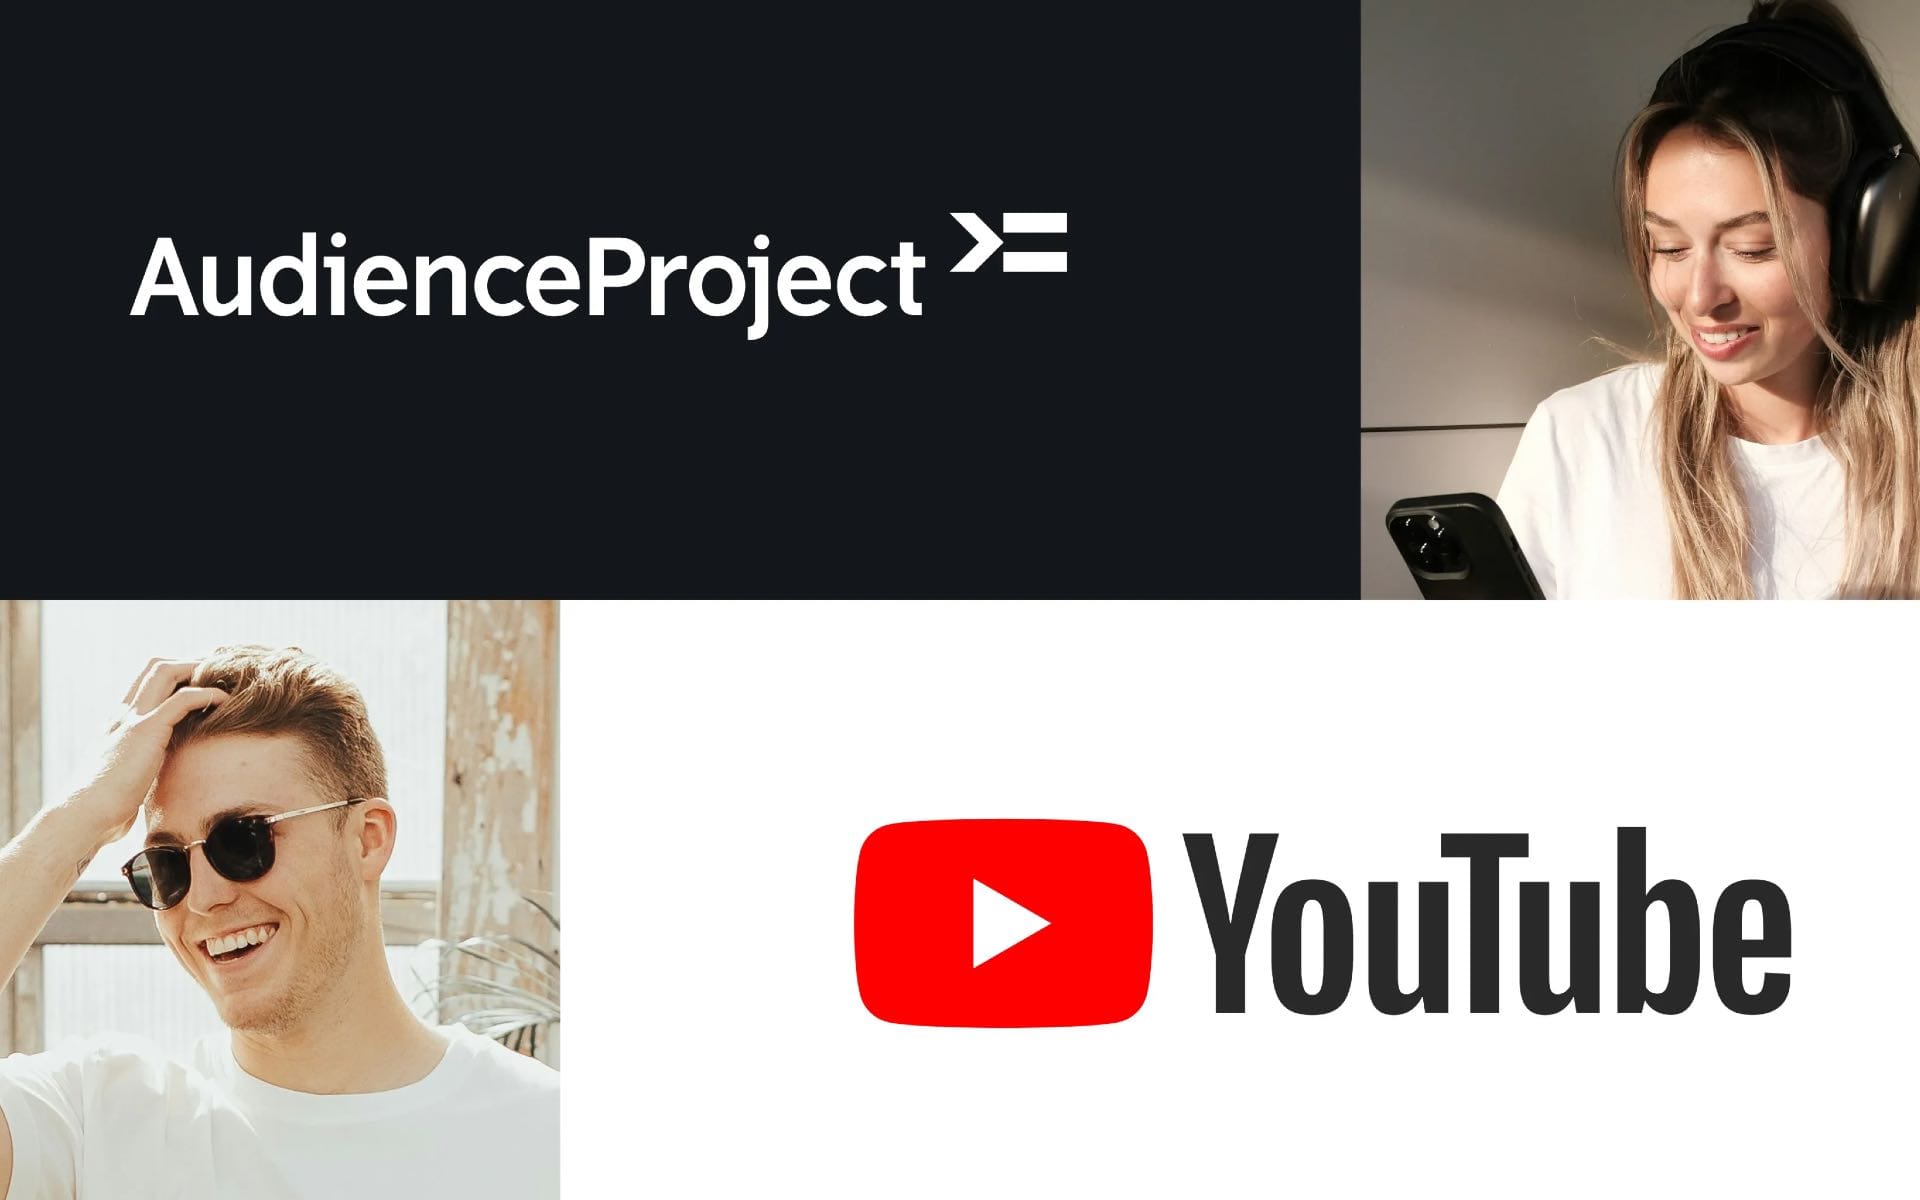 AudienceProject pioneers YouTube Cross-Media Measurement